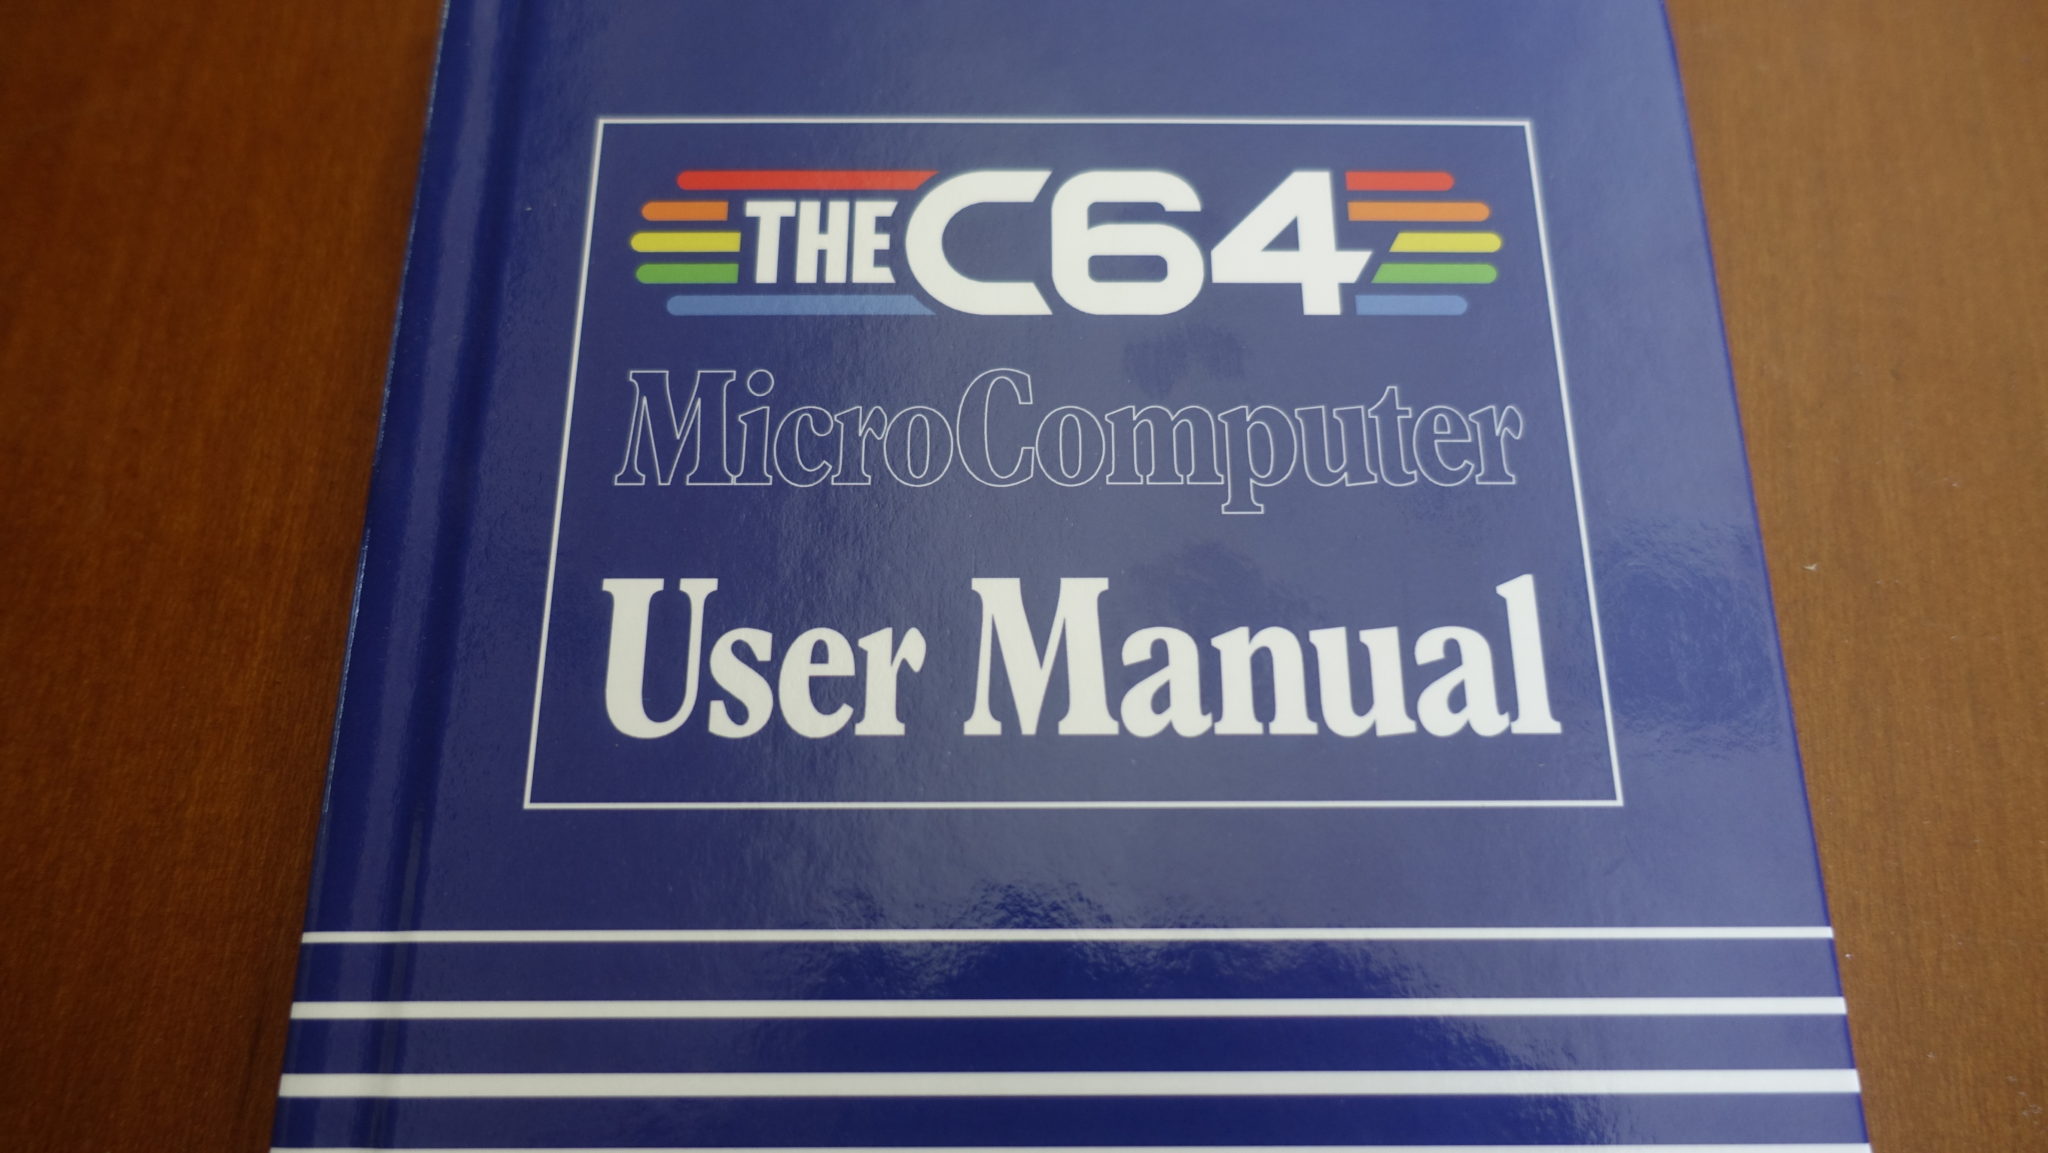 THEC64 User Manual Book Review